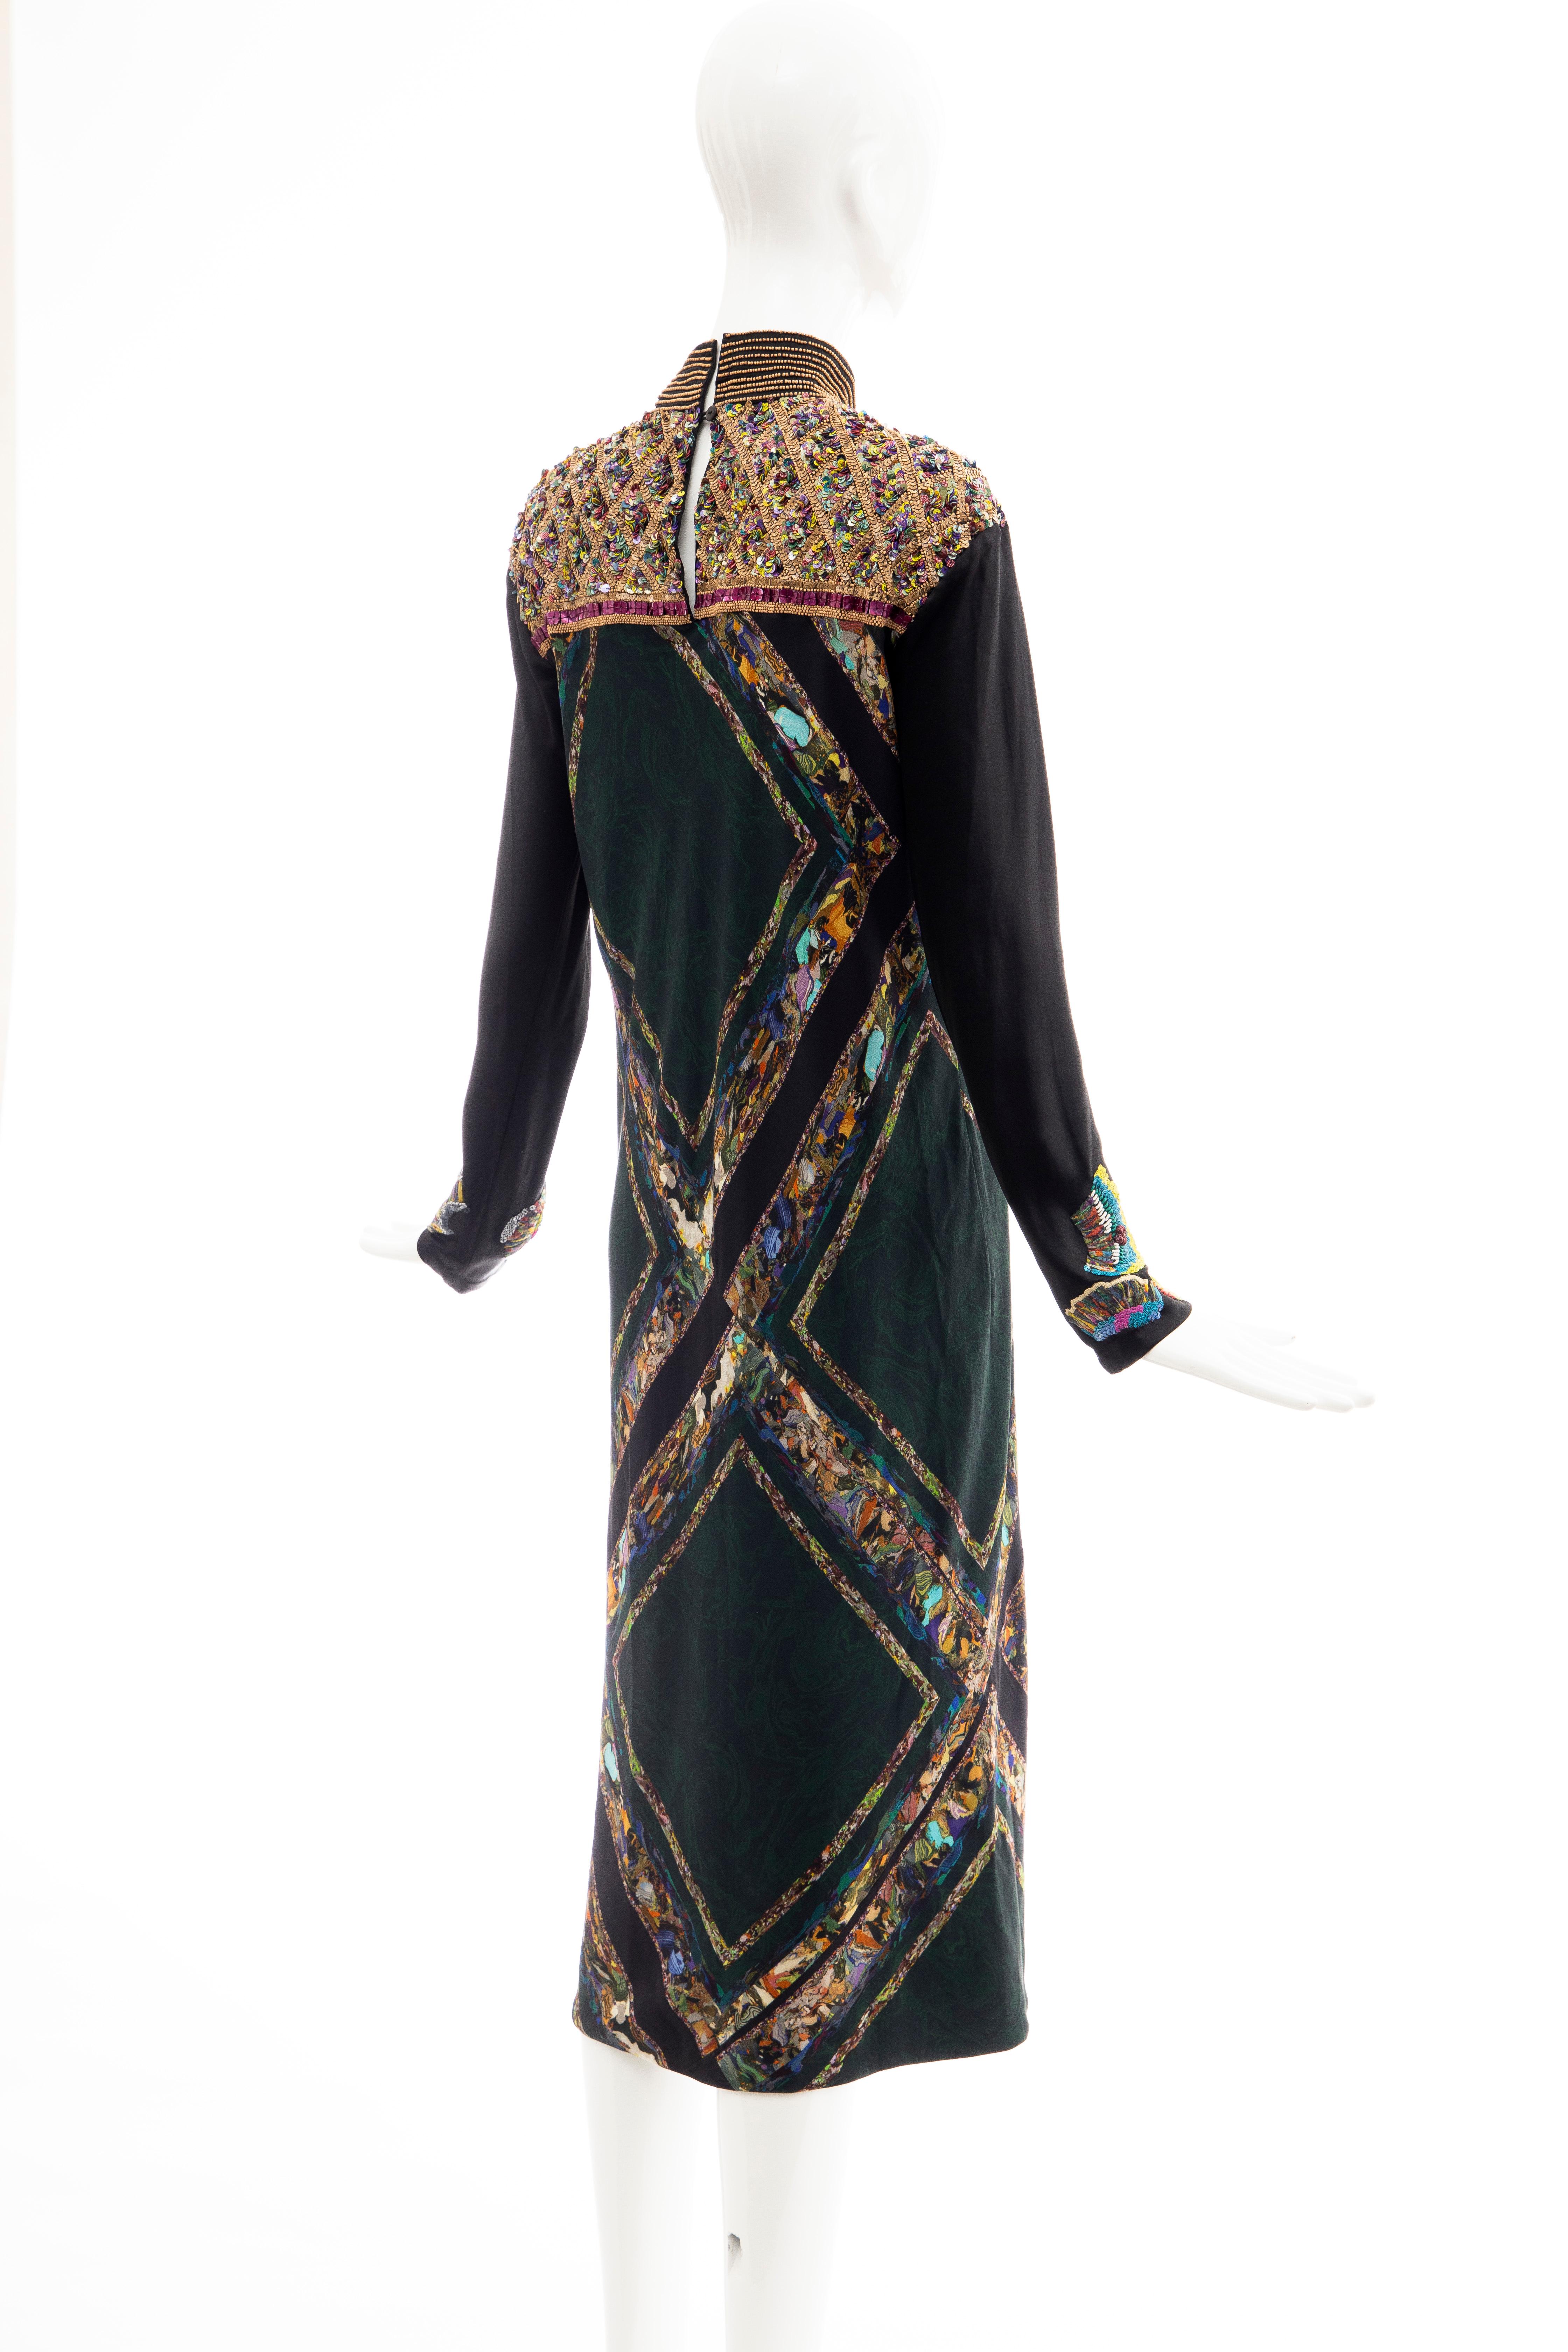 Dries van Noten Runway Bead & Sequin Embroidery Silk Printed Dress, Fall 2008 1